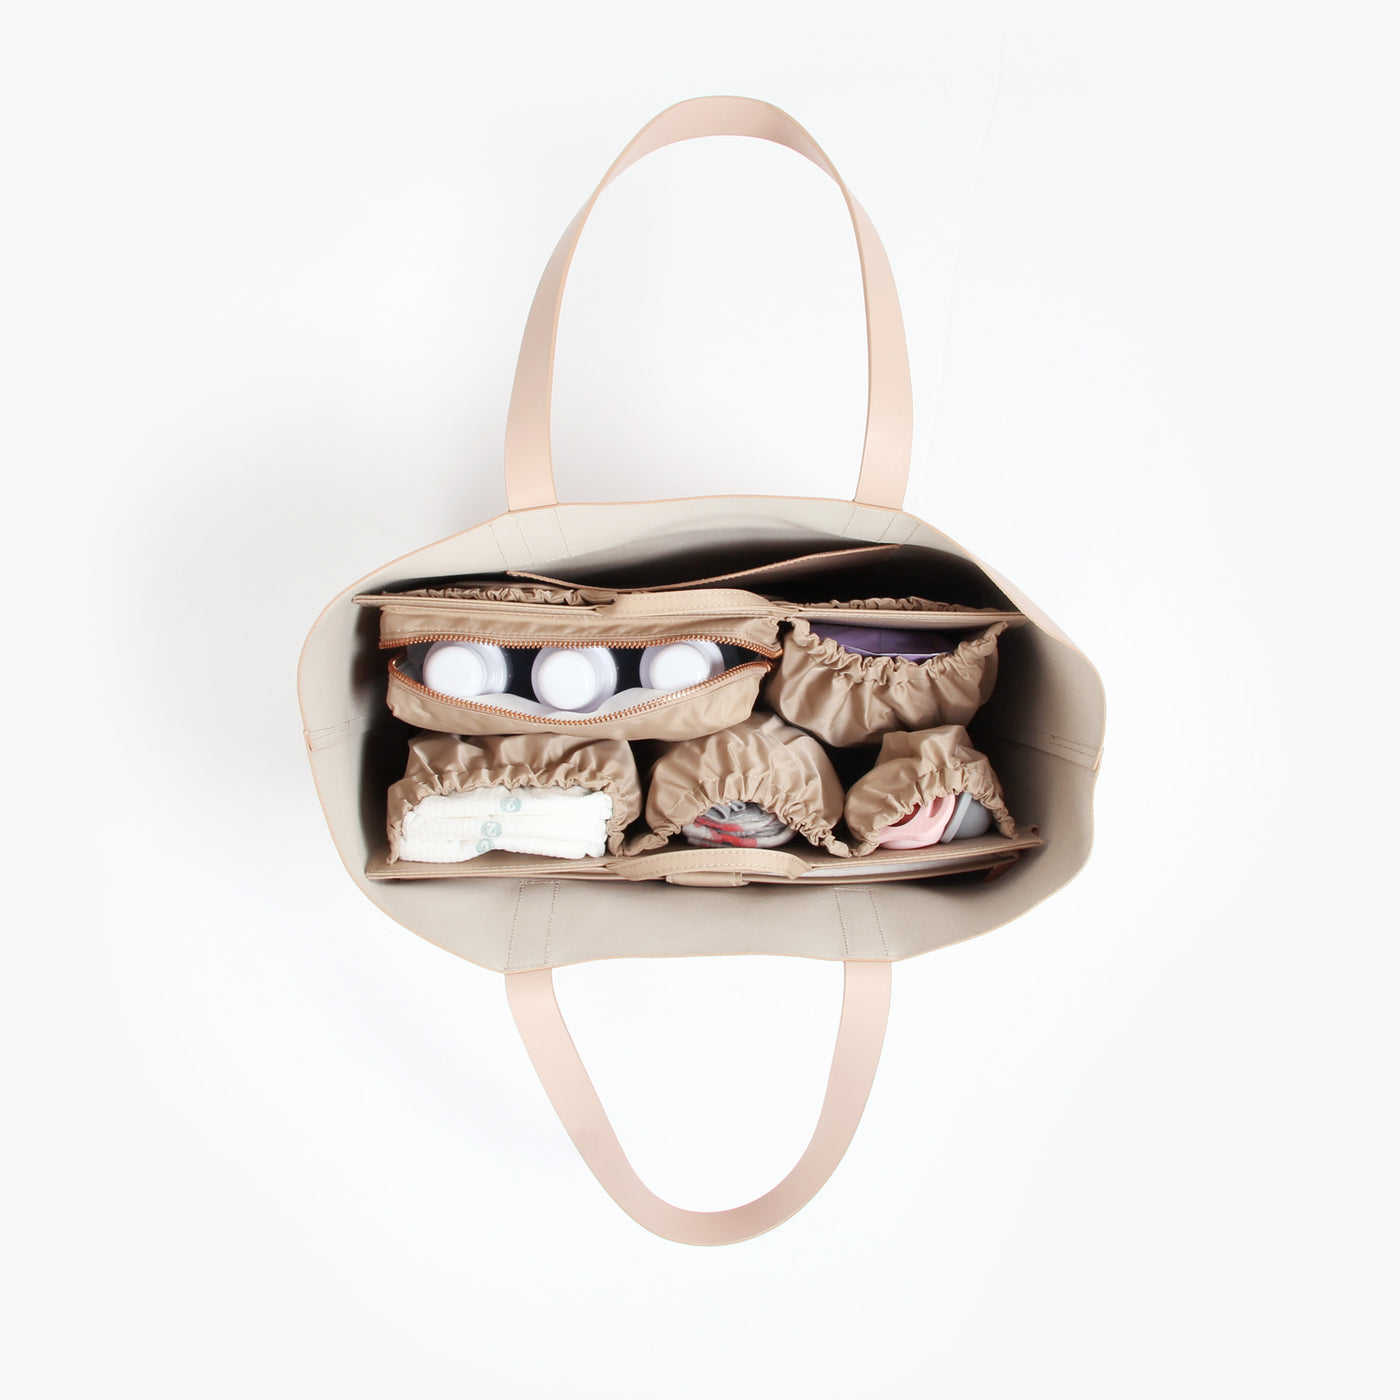 Ready stock* TOTE SAVVY X JOBIBI Mommy Bag Organizer Insert Baby Diaper Bag